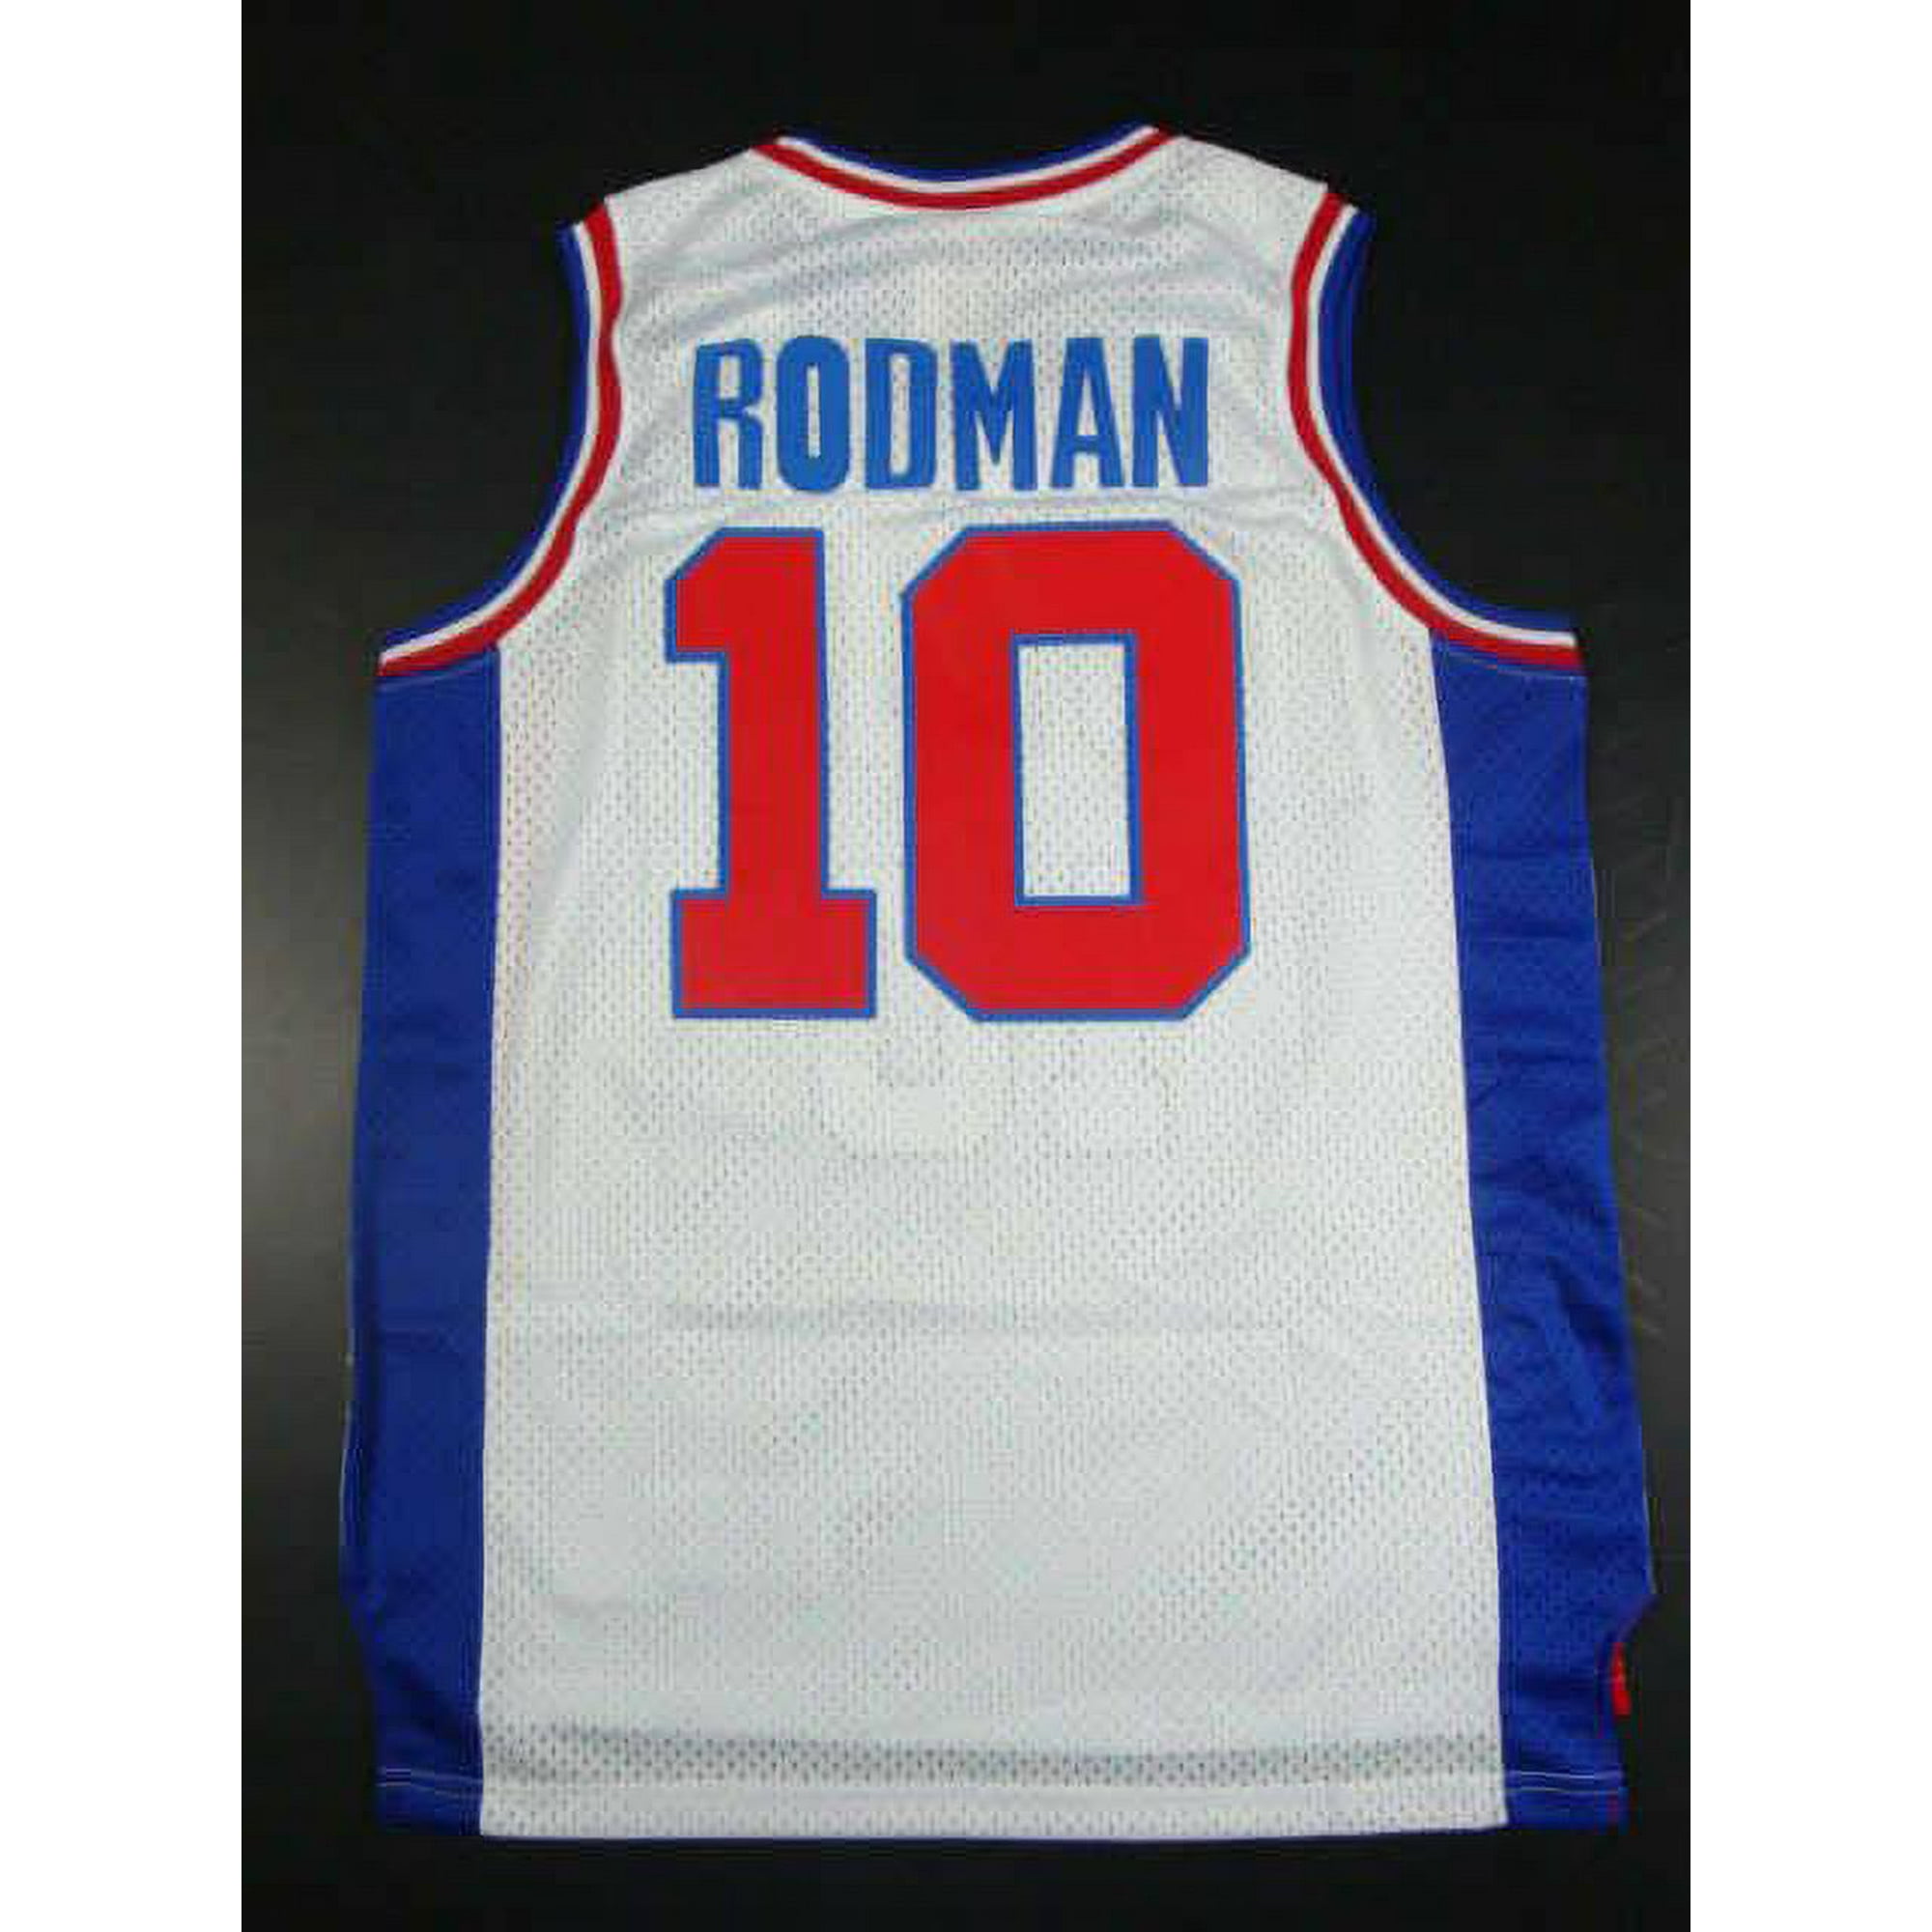 NBA_ College Wears Men's #91 Dennis Rodman Jersey #33 Scottie